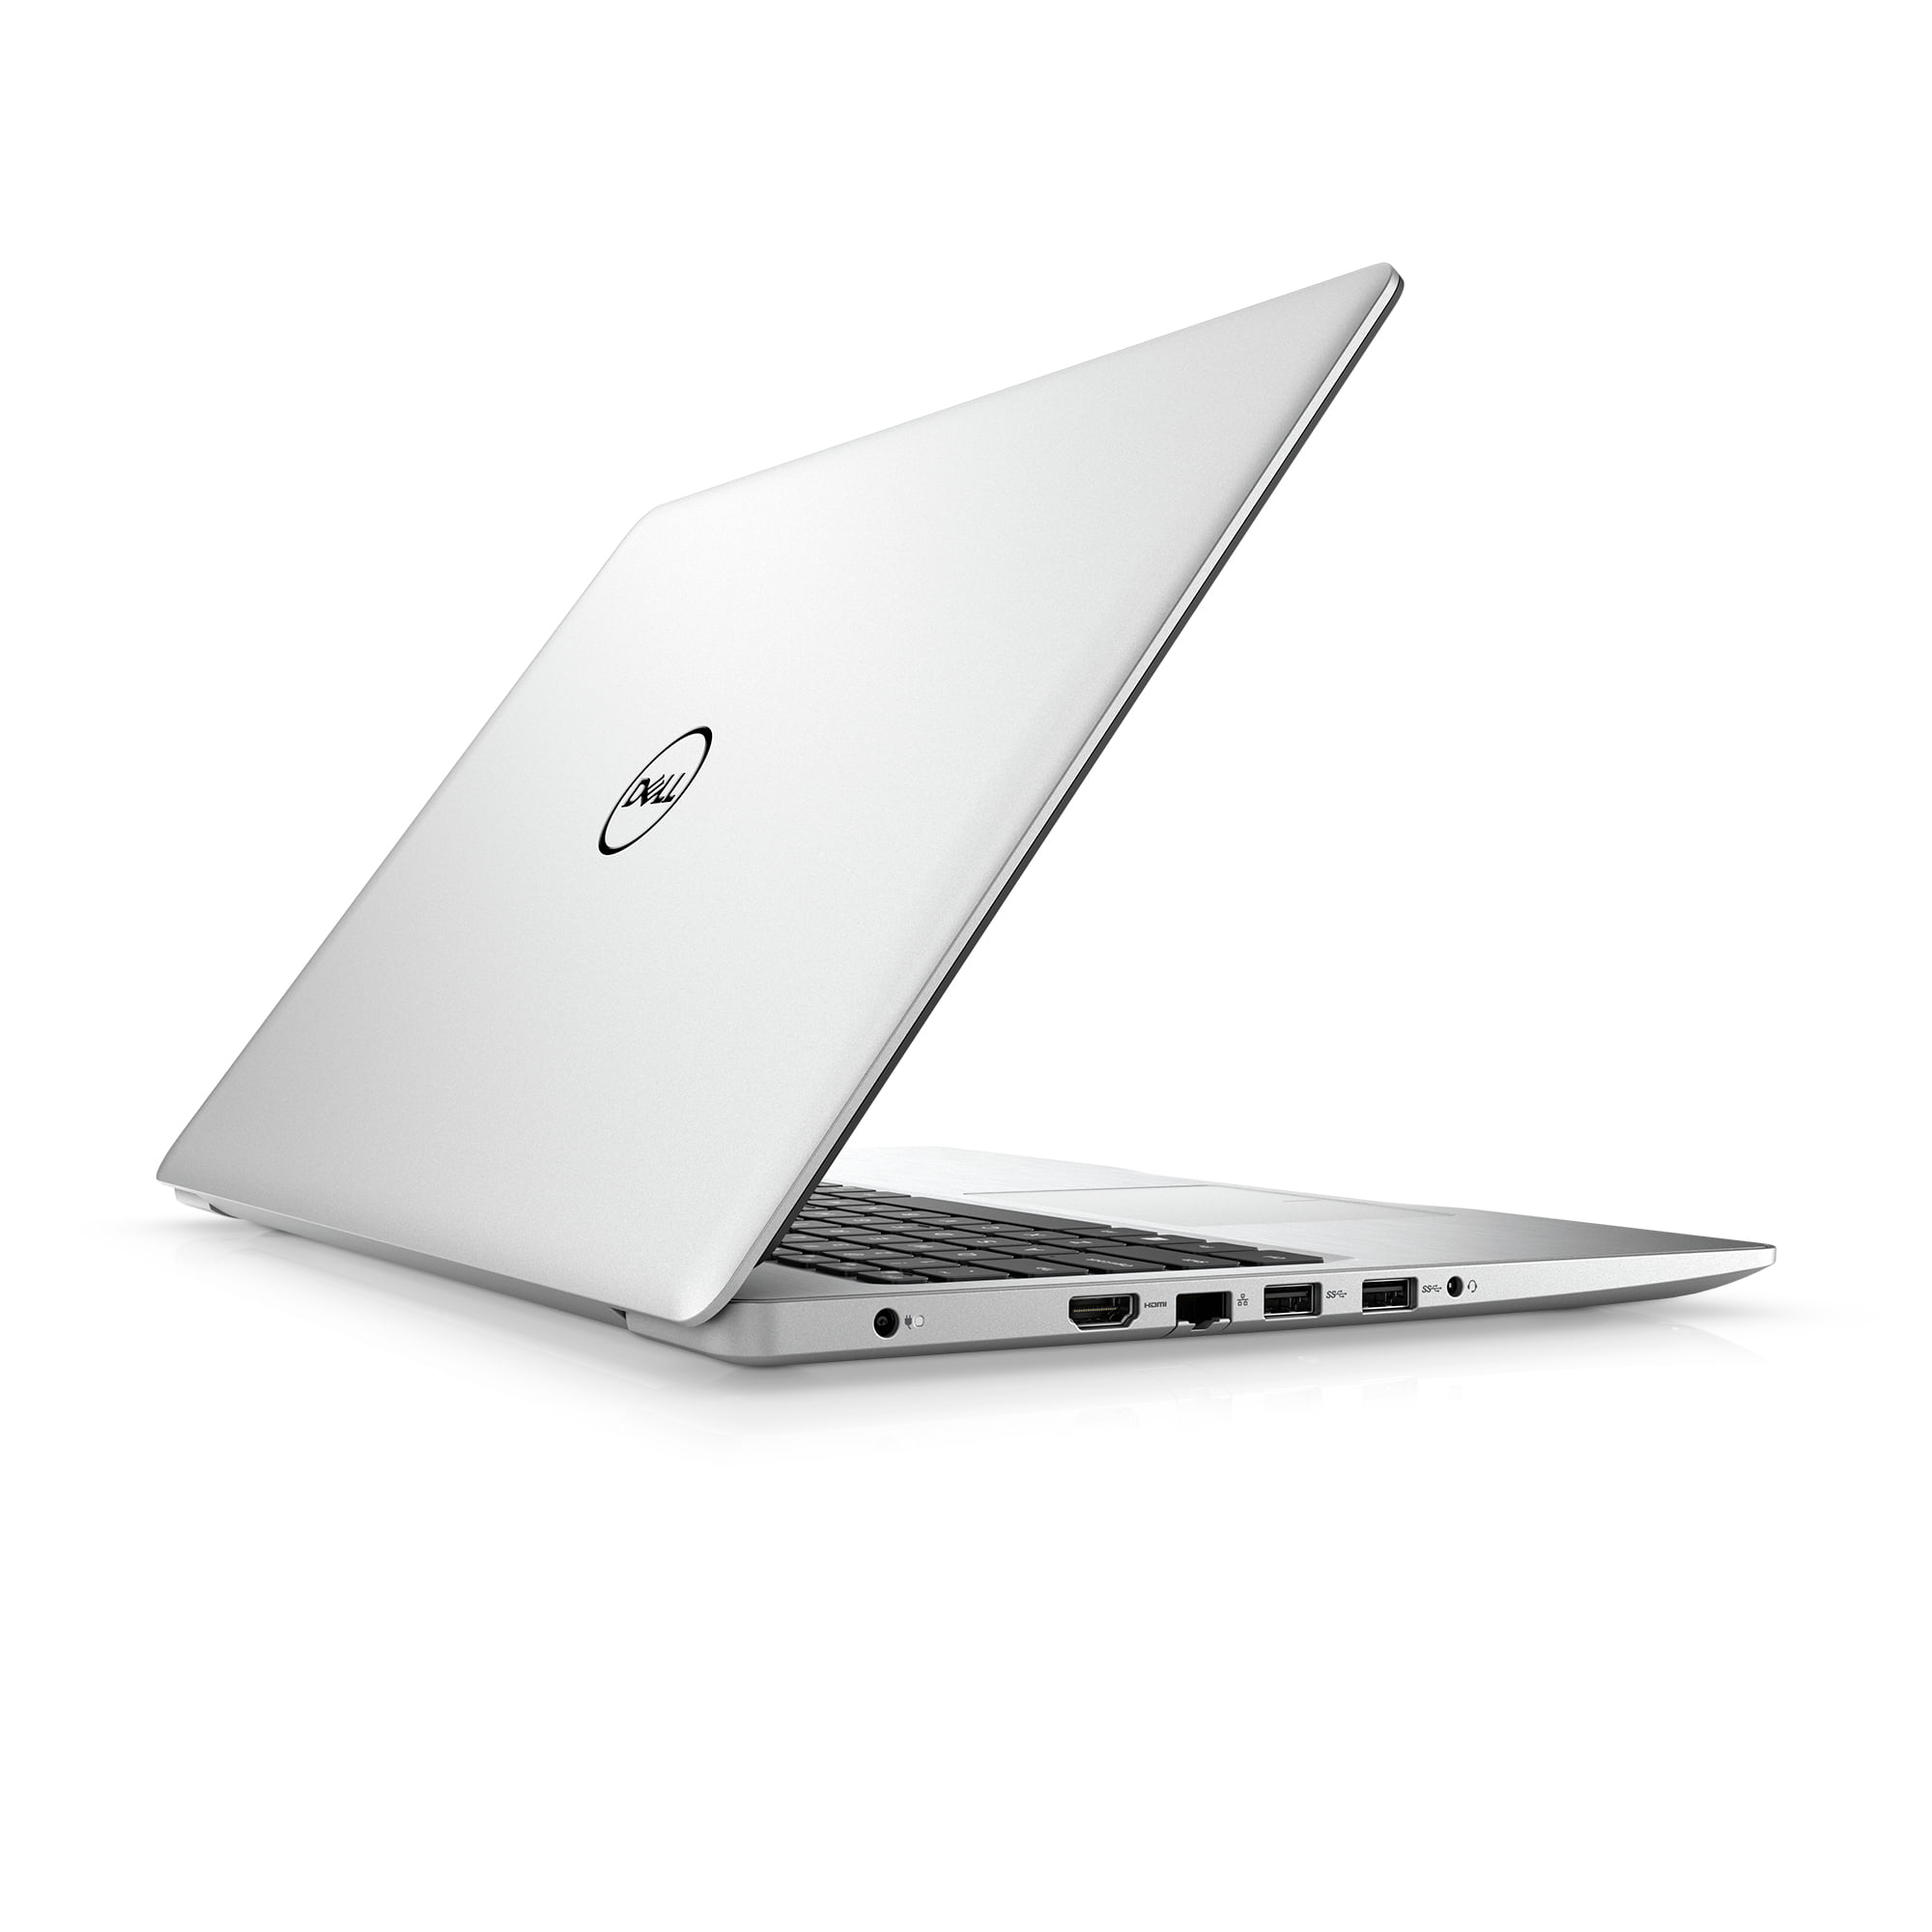 Dell 15.6" Laptop Intel Core i7 8th Gen 8550U (1.80 GHz) 12 GB DDR4 1 TB HDD Windows 10 Home - Walmart.com